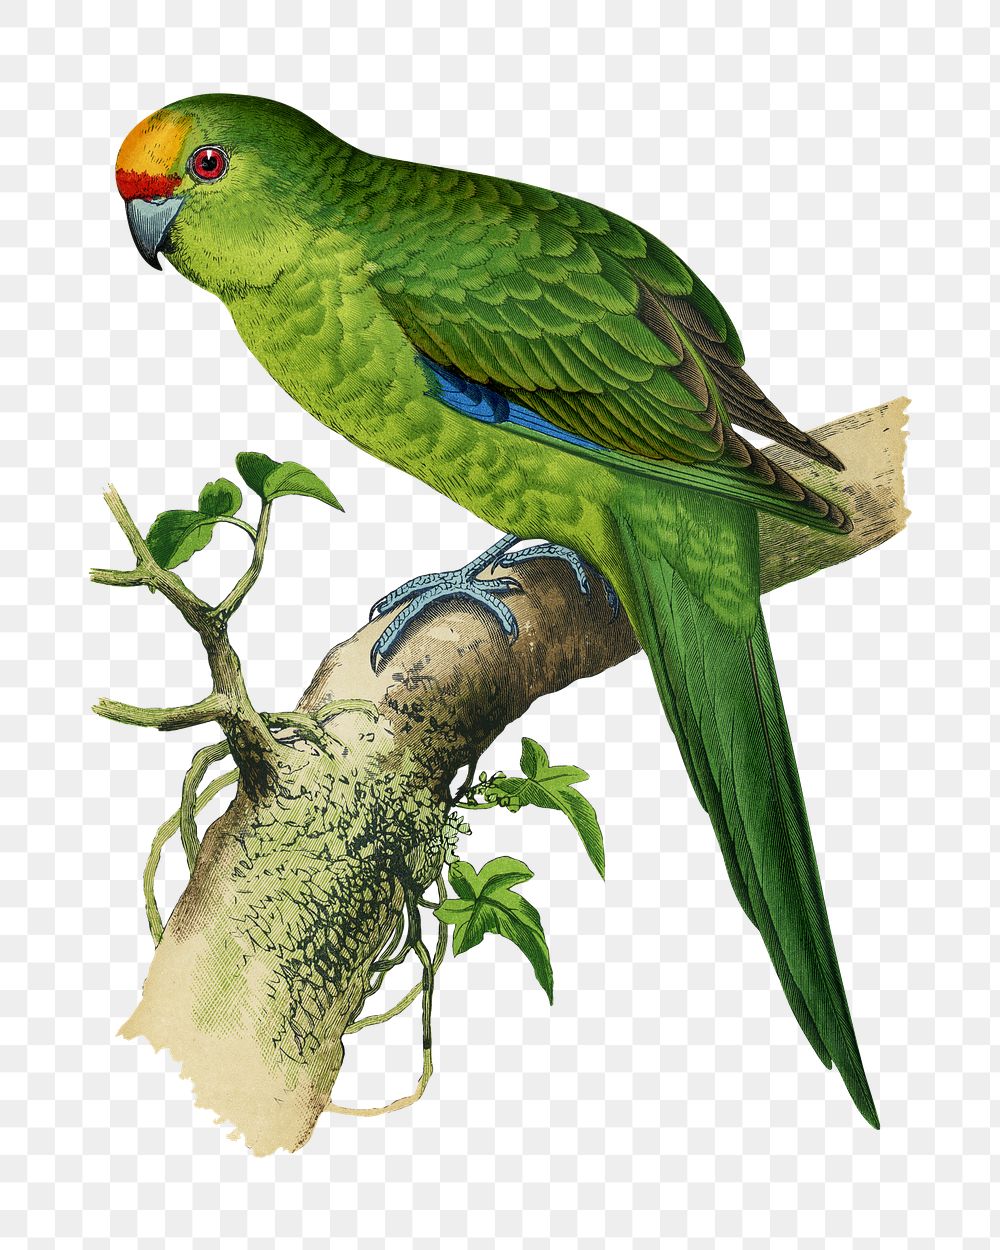 Vintage bird png golden-crowned parakeet, transparent background. Remixed by rawpixel.